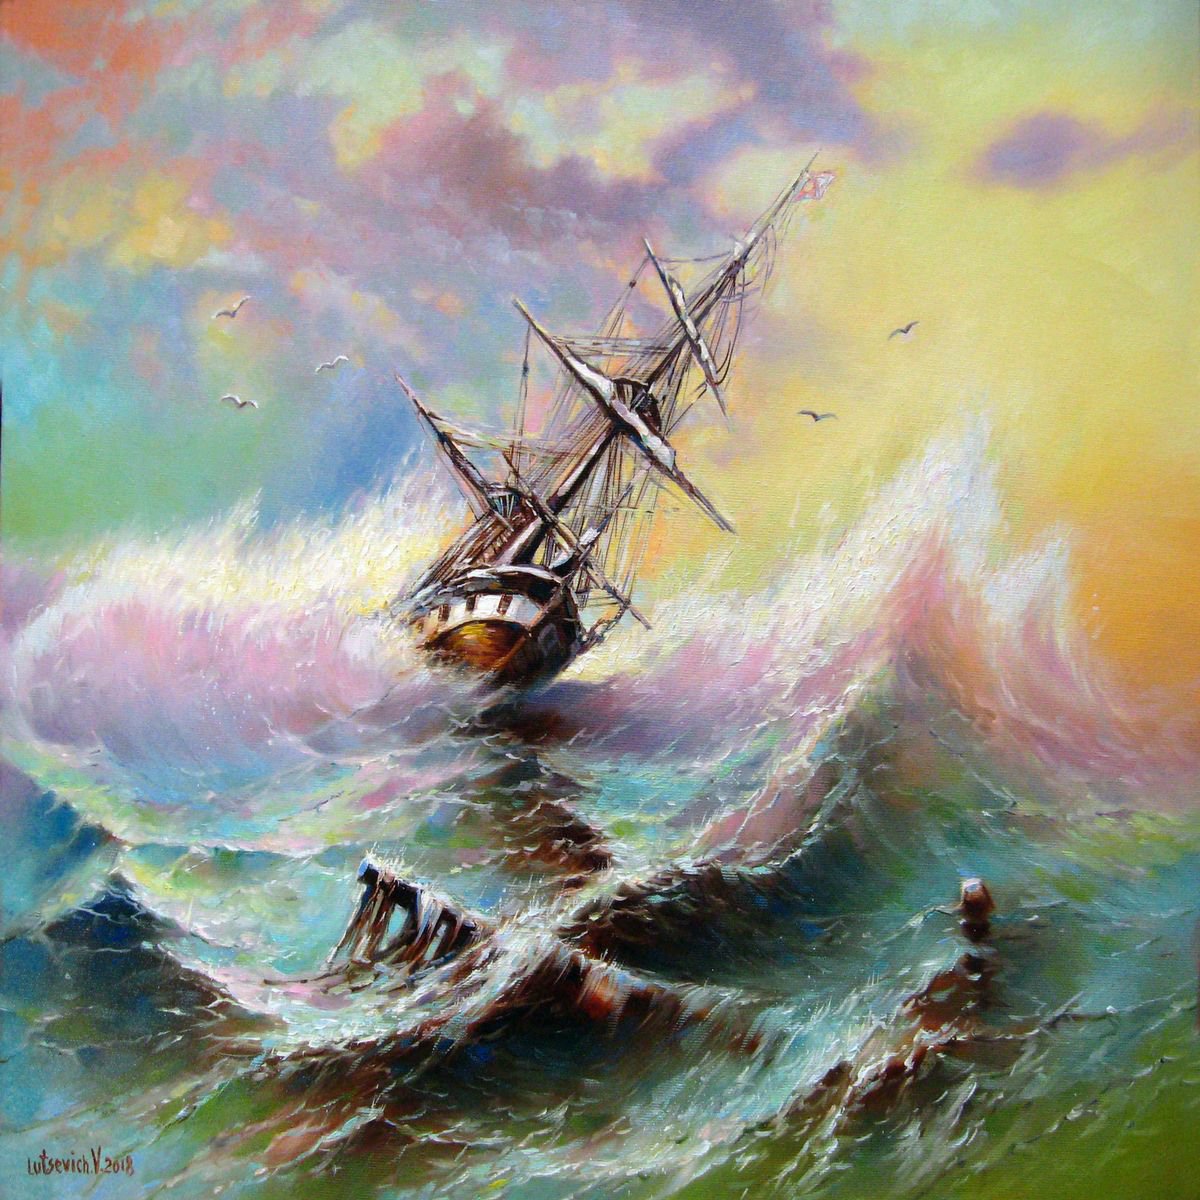 Storm at sea by Vladimir Lutsevich